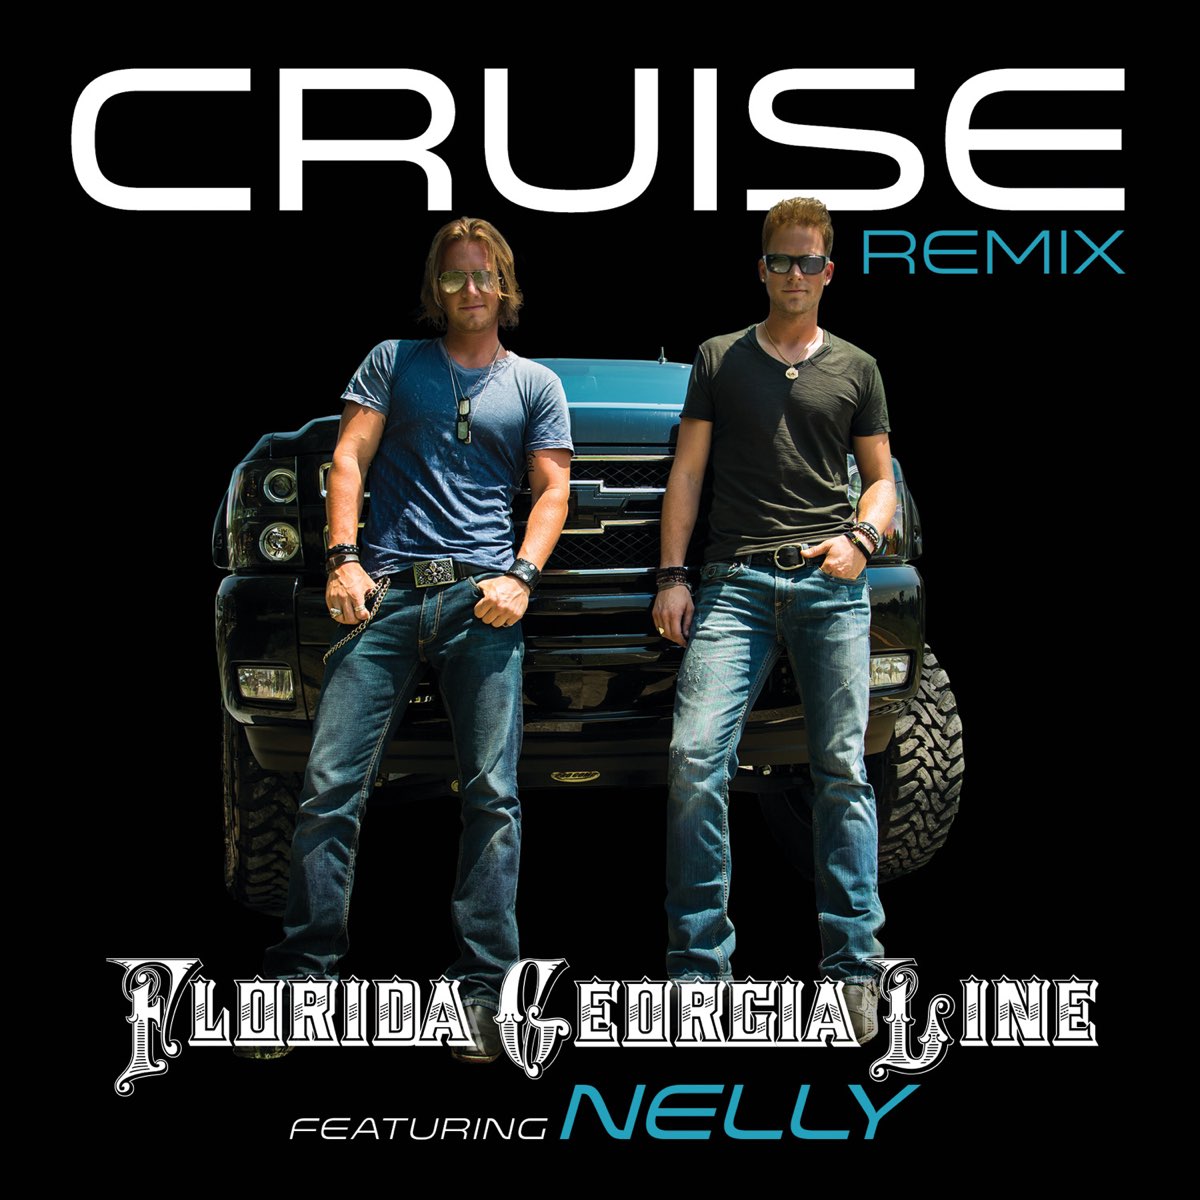 florida georgia line cruise remix models